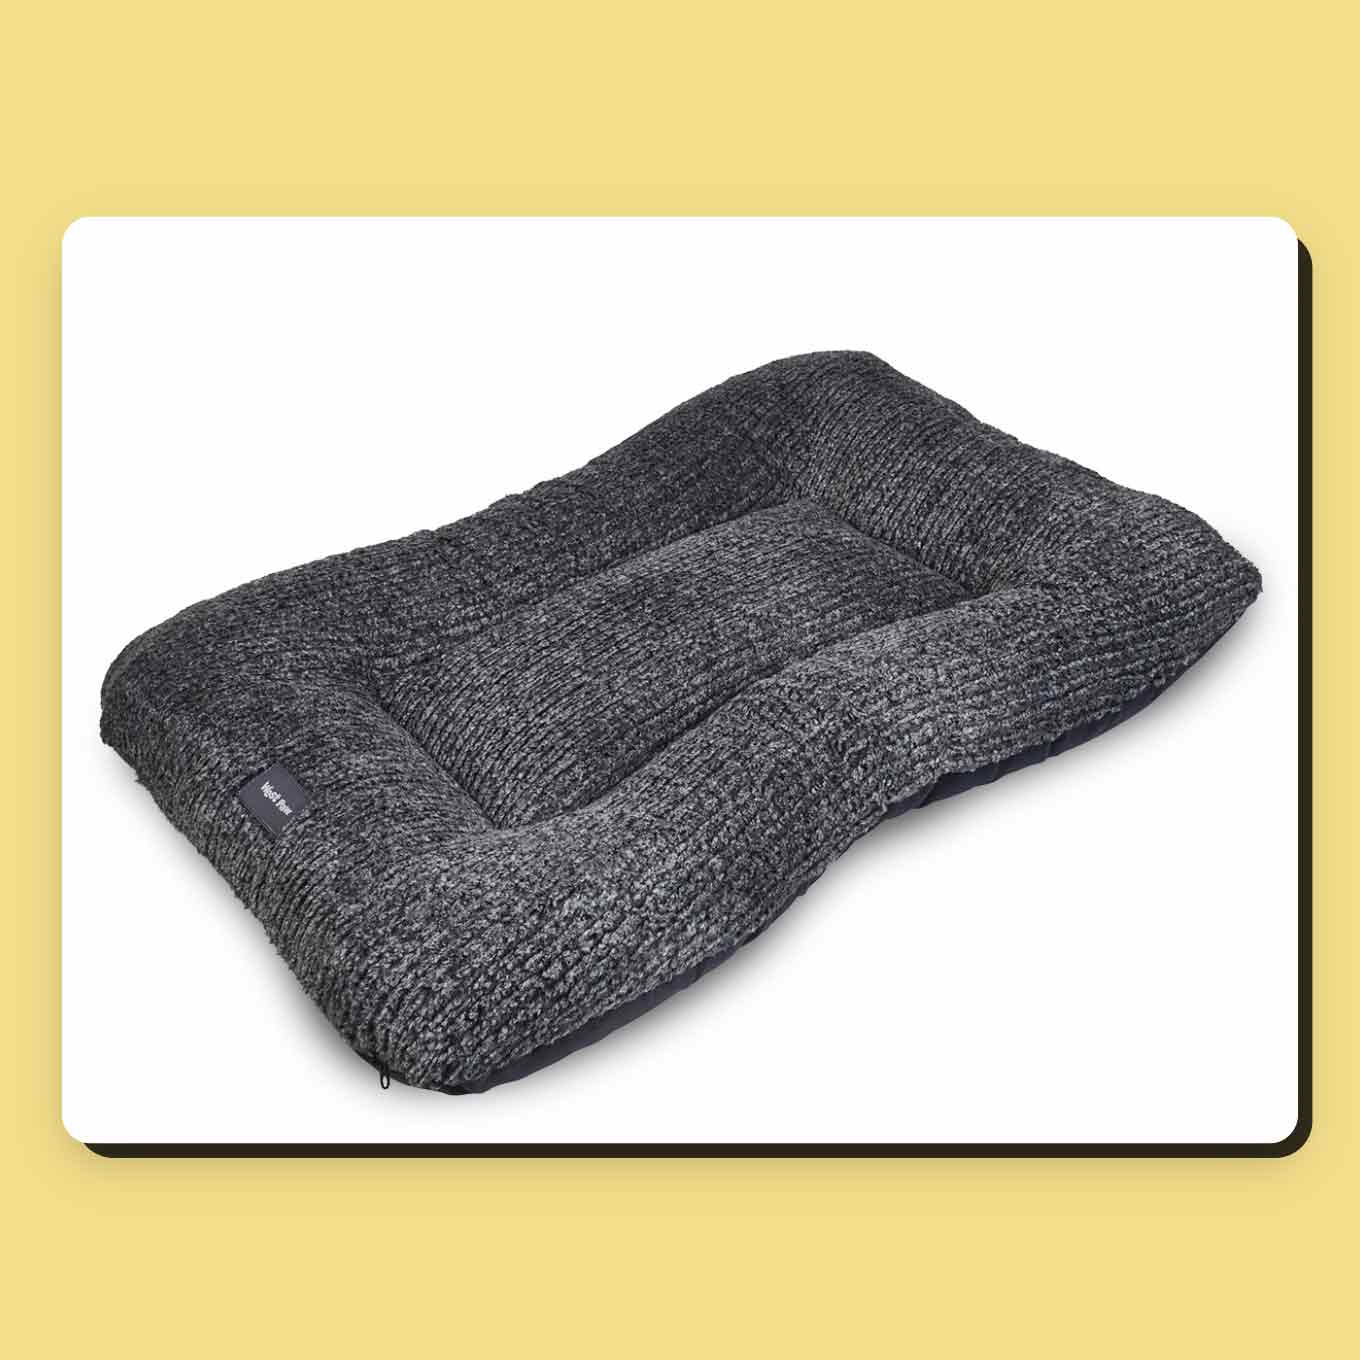 West Paw grey dog bed